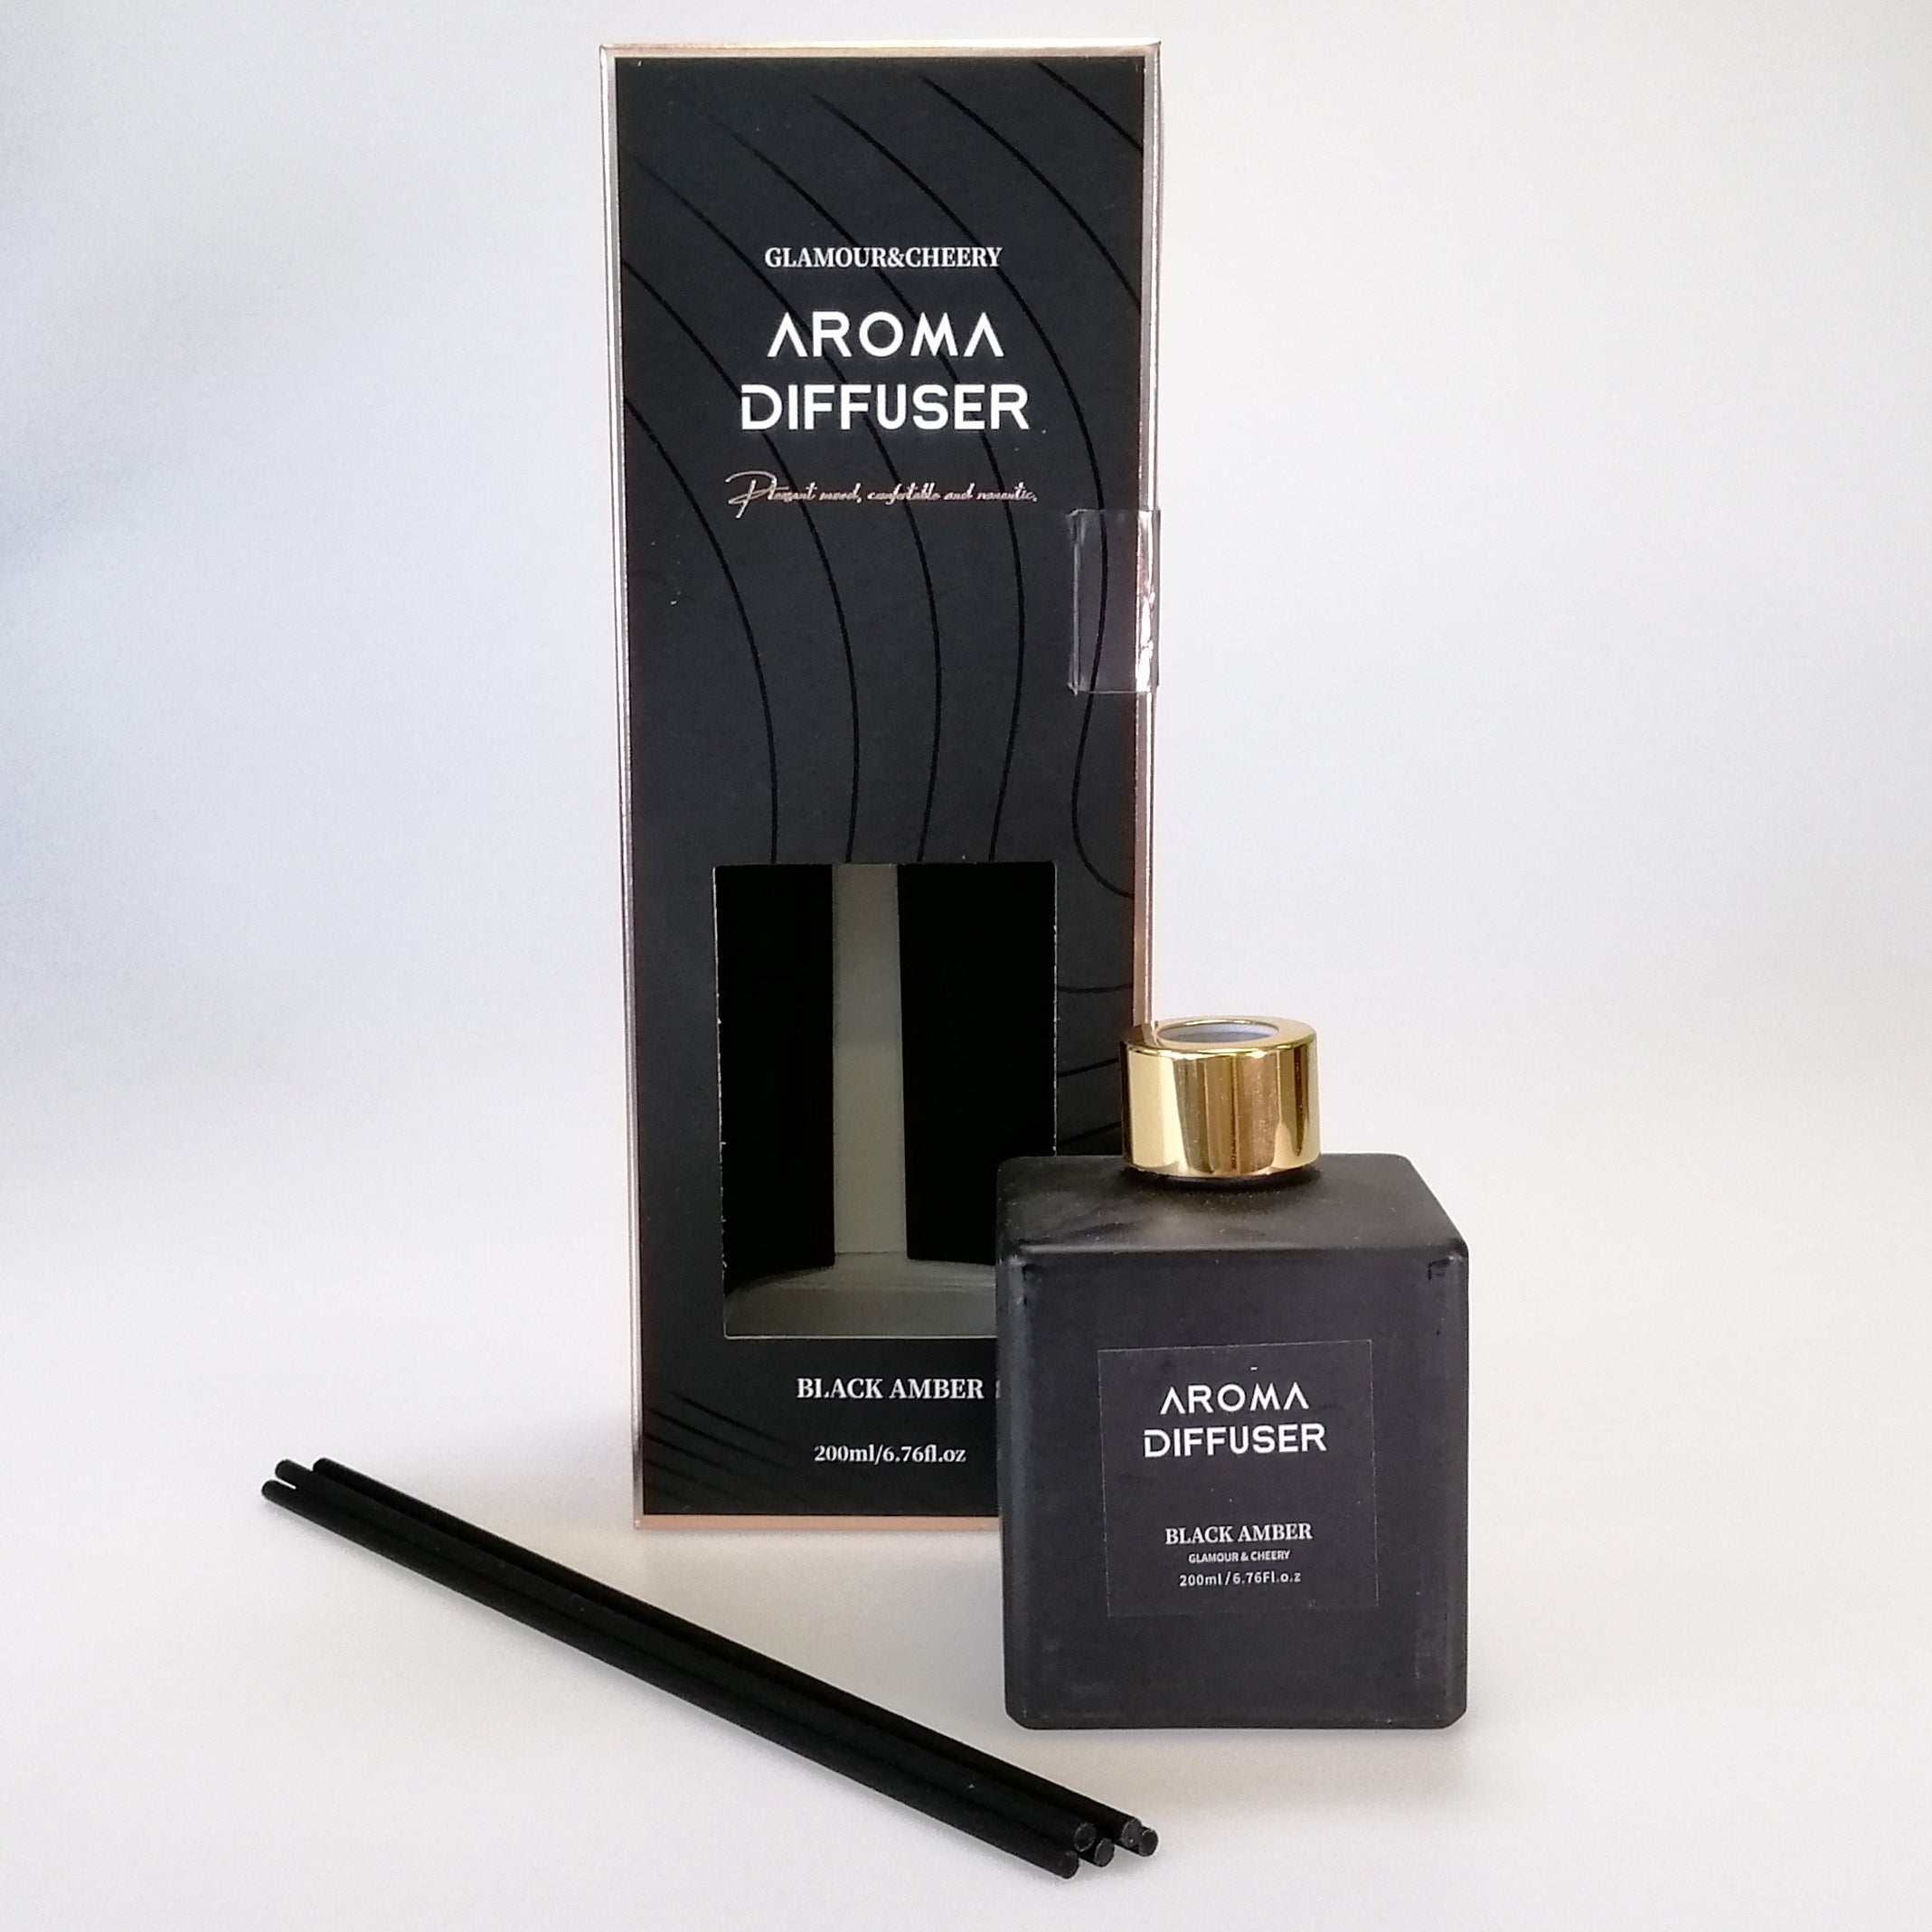 Glamour & Cheery Aroma Diffuser - Black Amber - 200ml